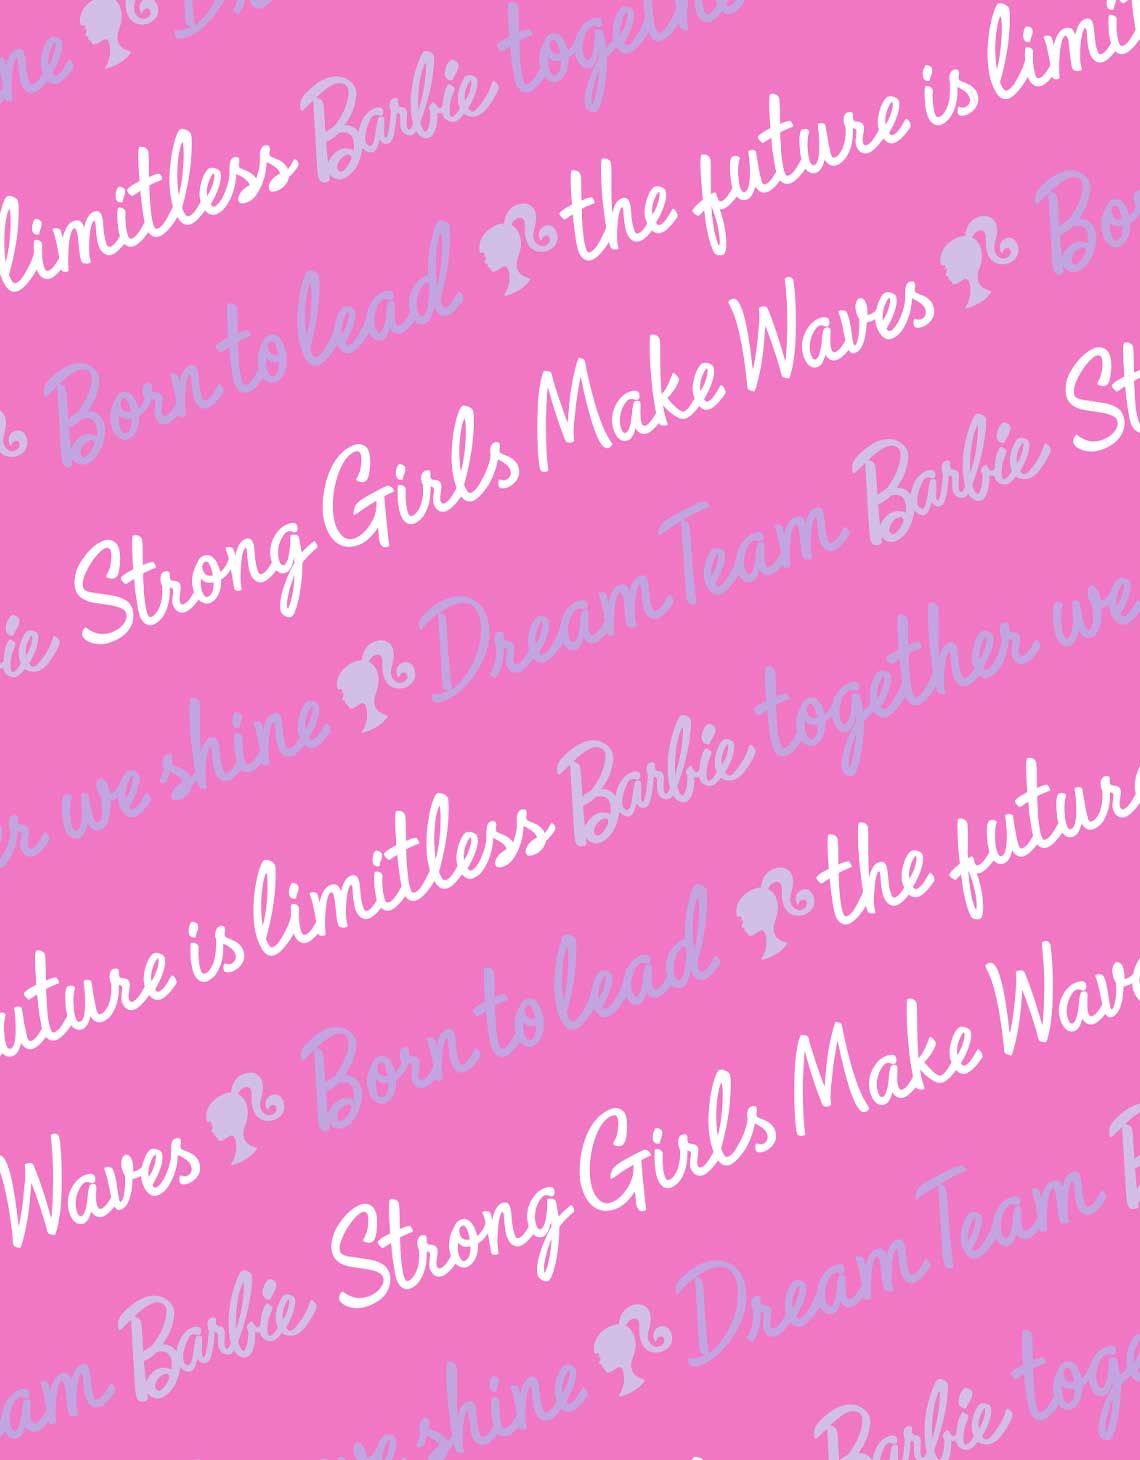 Barbie Strong Girls Make Waves Wallpaper Mural